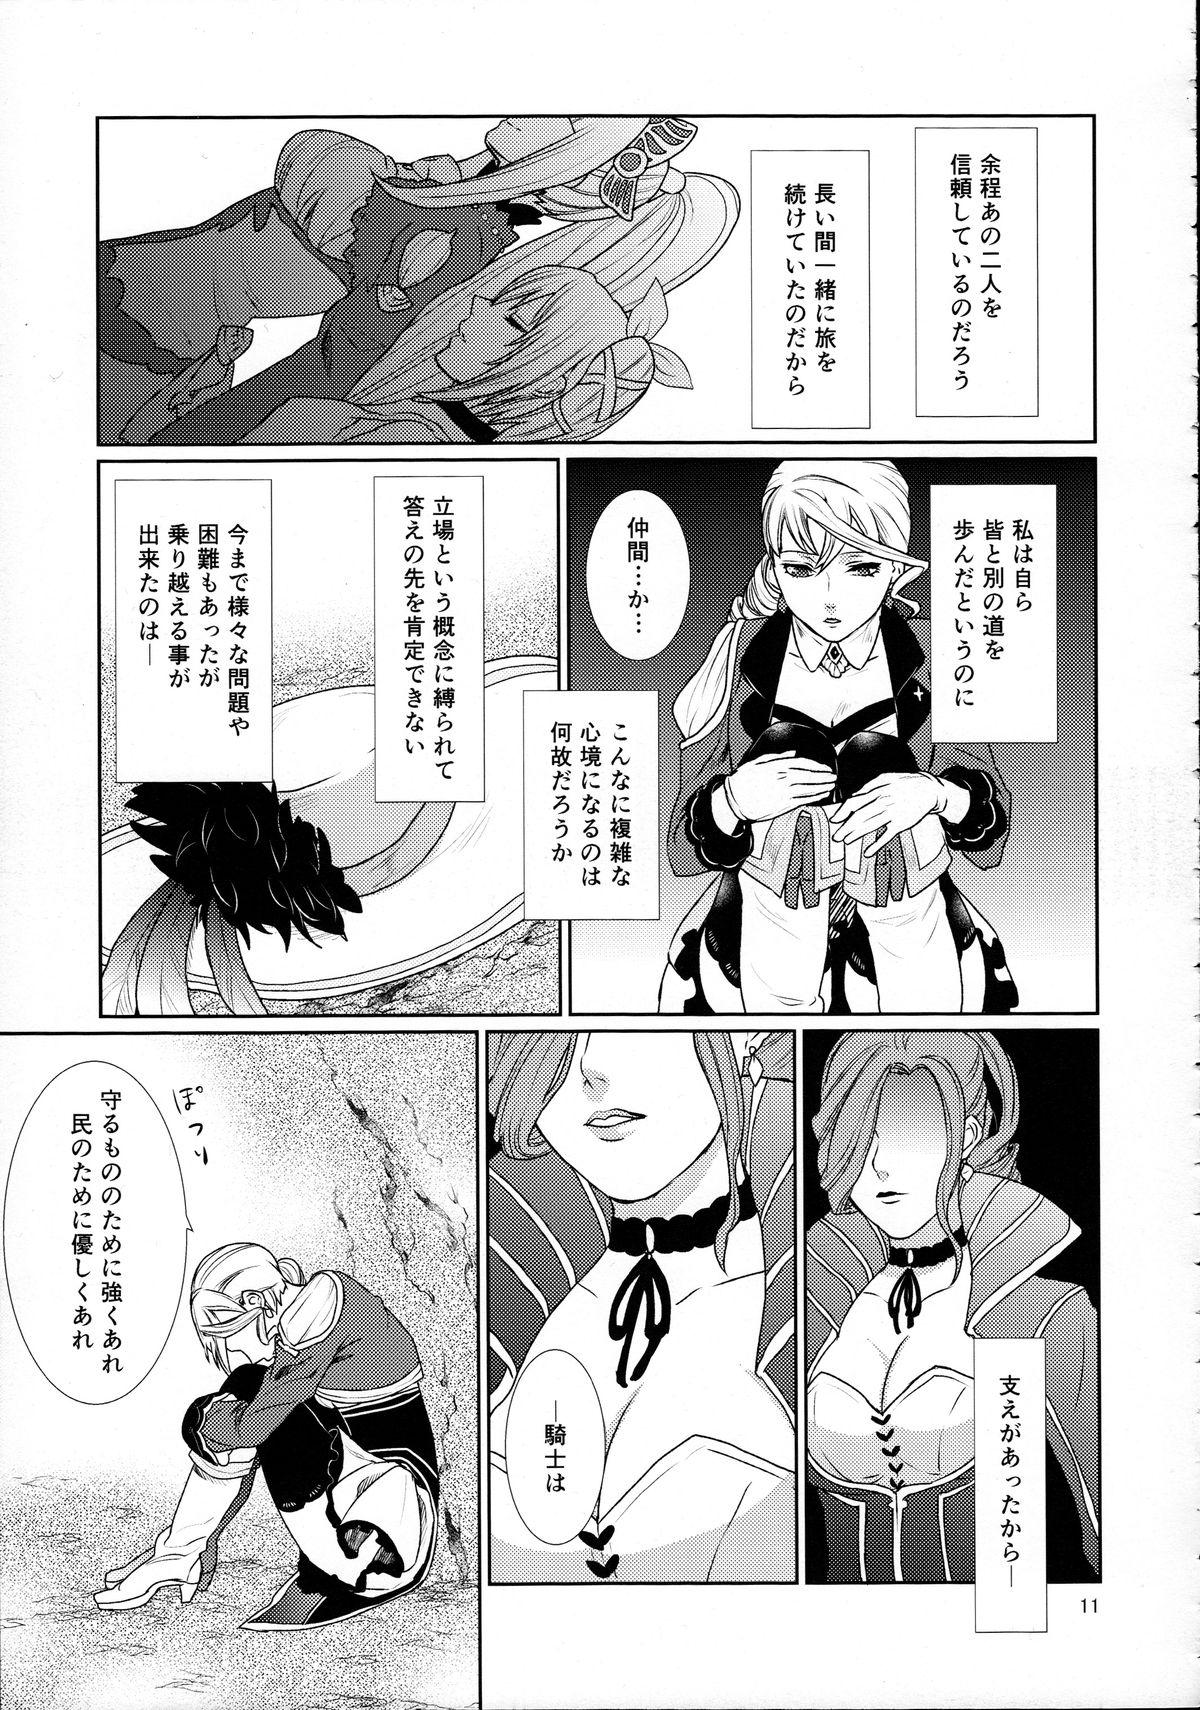 Highheels Sennyuu Chishiki to Setsuju - Tales of zestiria Freaky - Page 11